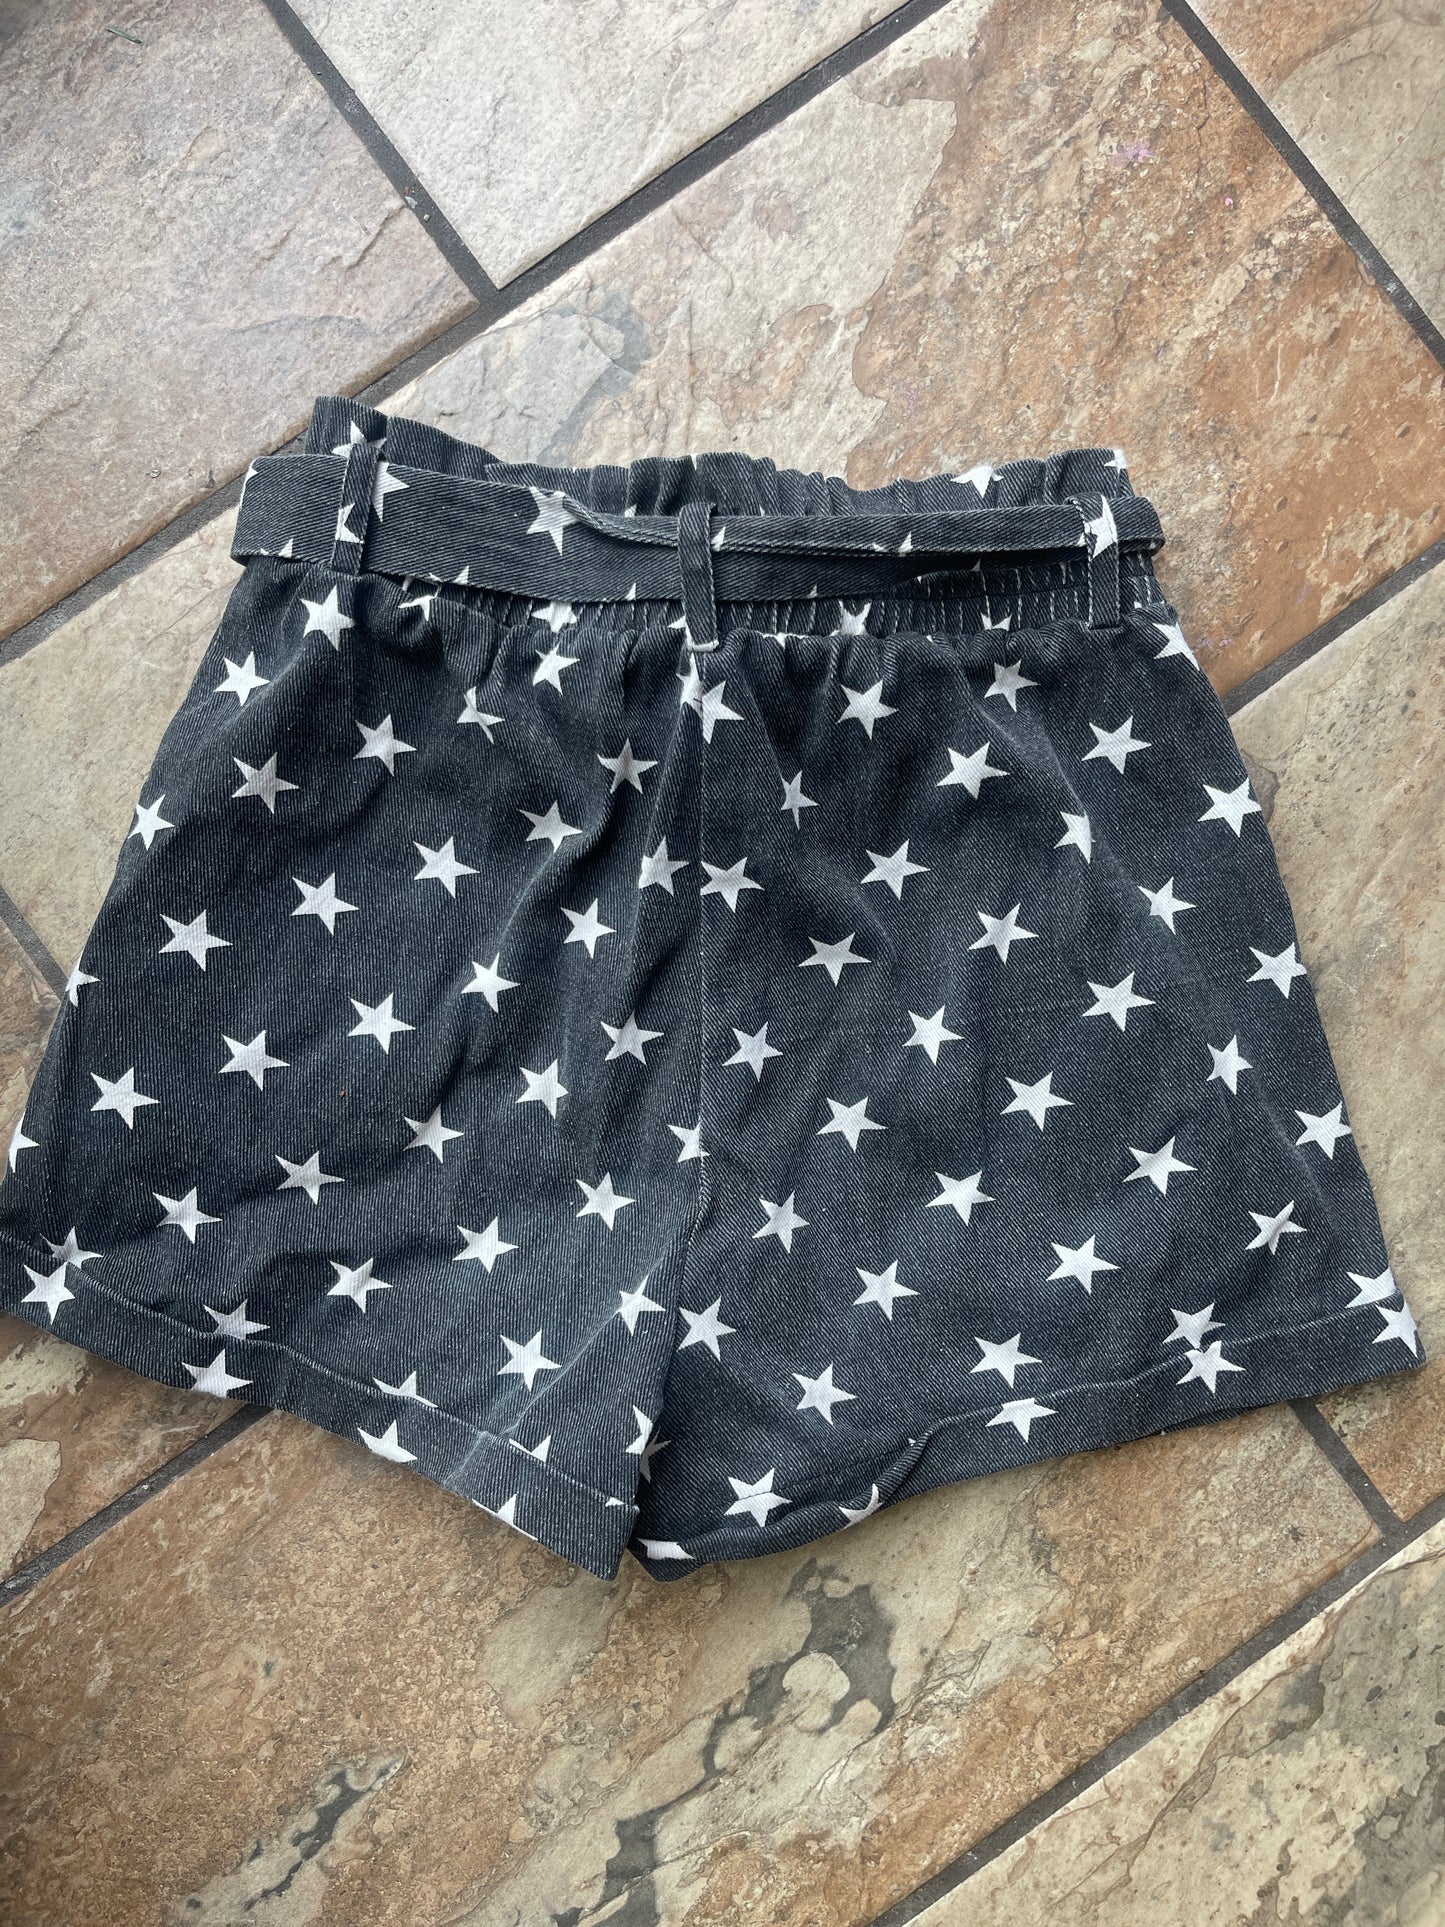 Lelis Black White Star Denim Shorts Women sz Medium